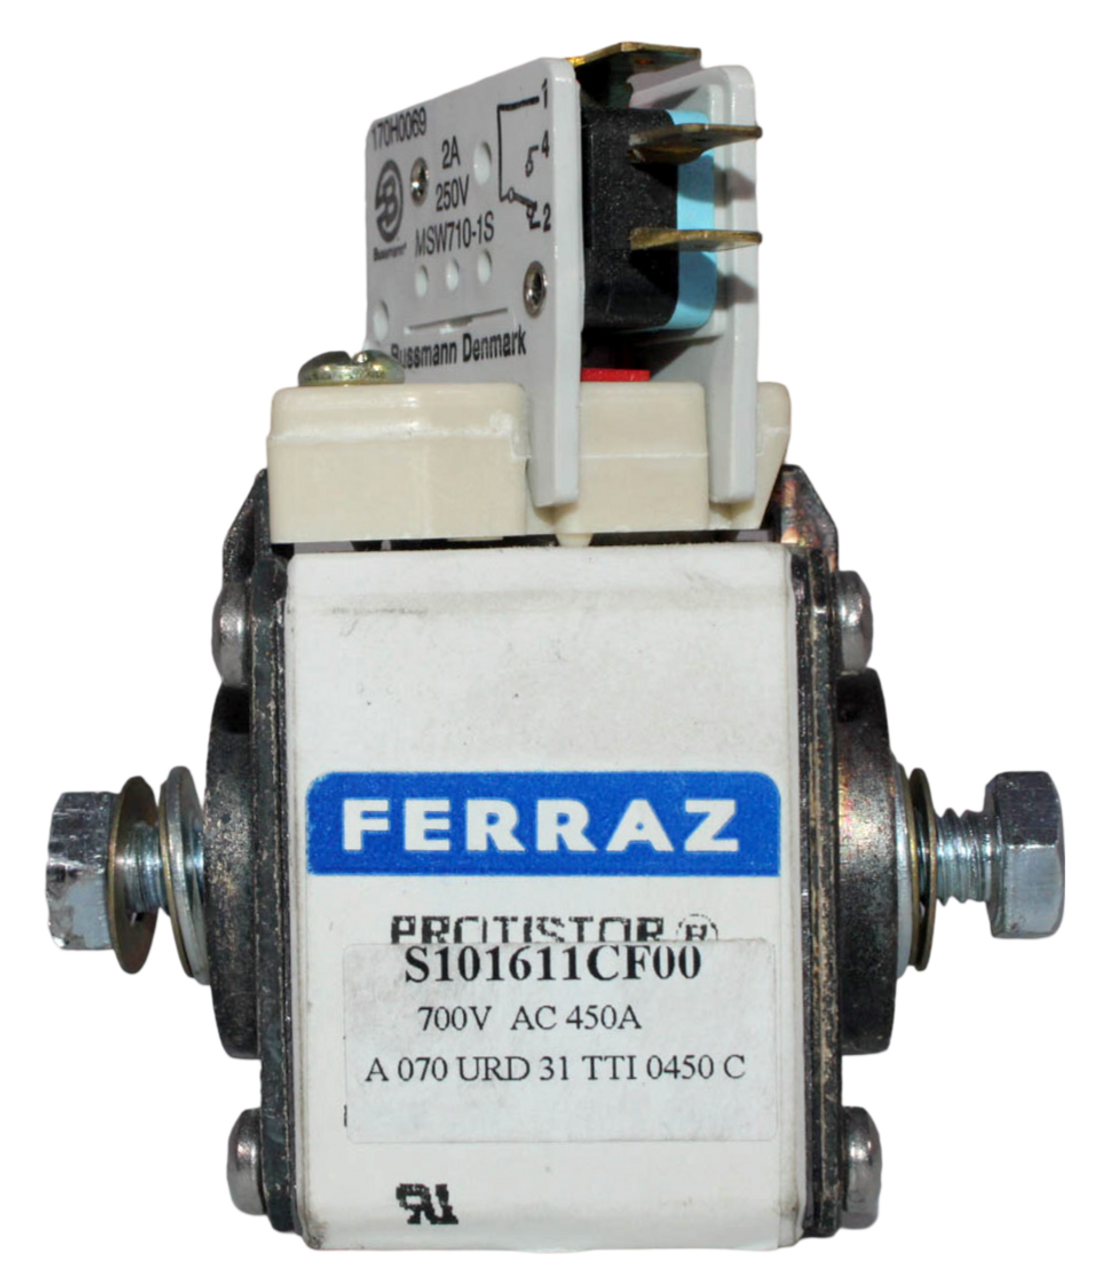 Ferraz S101611CF00 Protistor 450A 700V A070 URD 31 TTI 0450 C Ferraz Shawmut Fuse